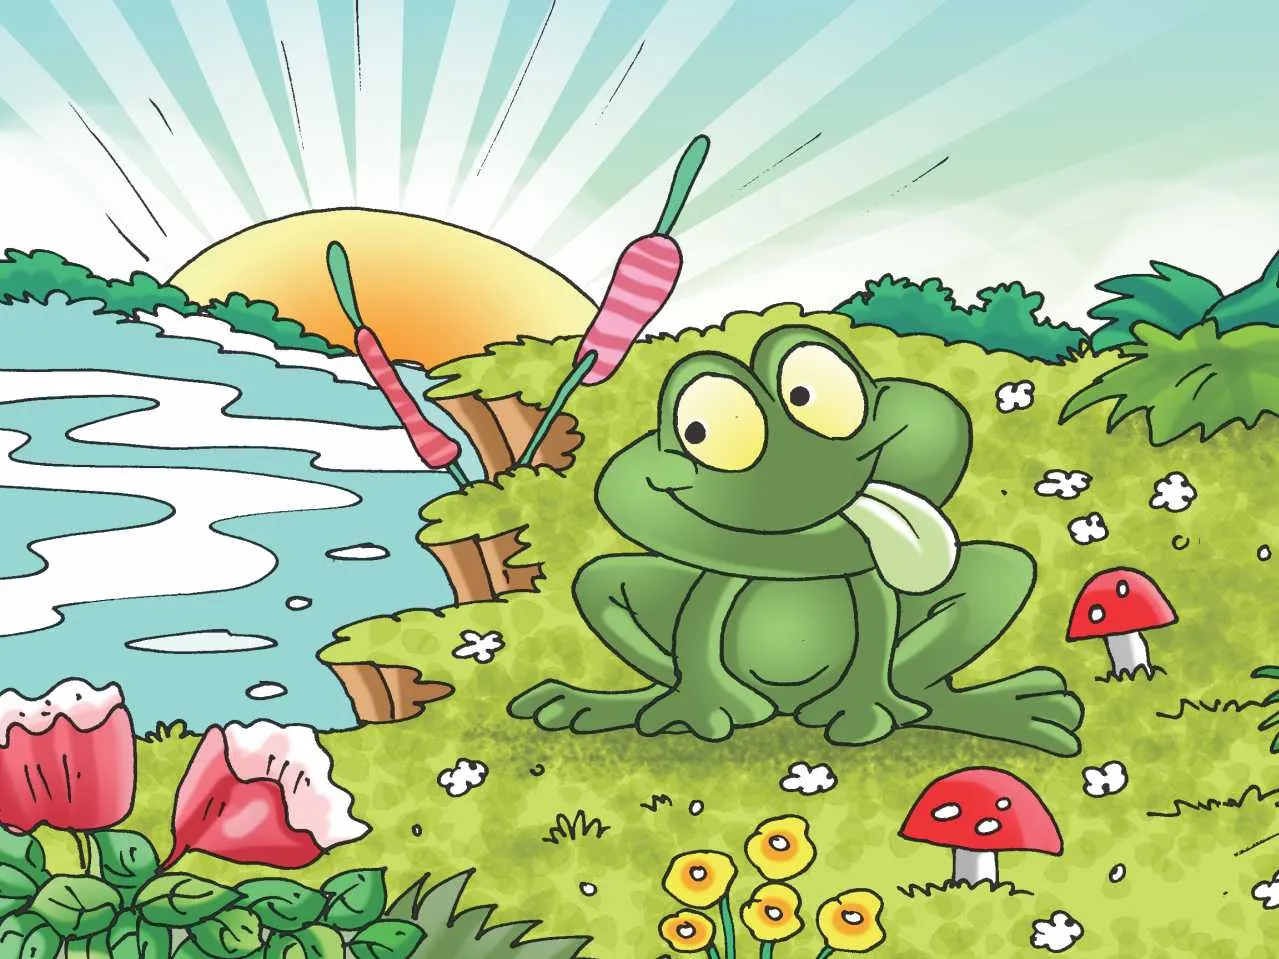 Frog near a pond cartoon image